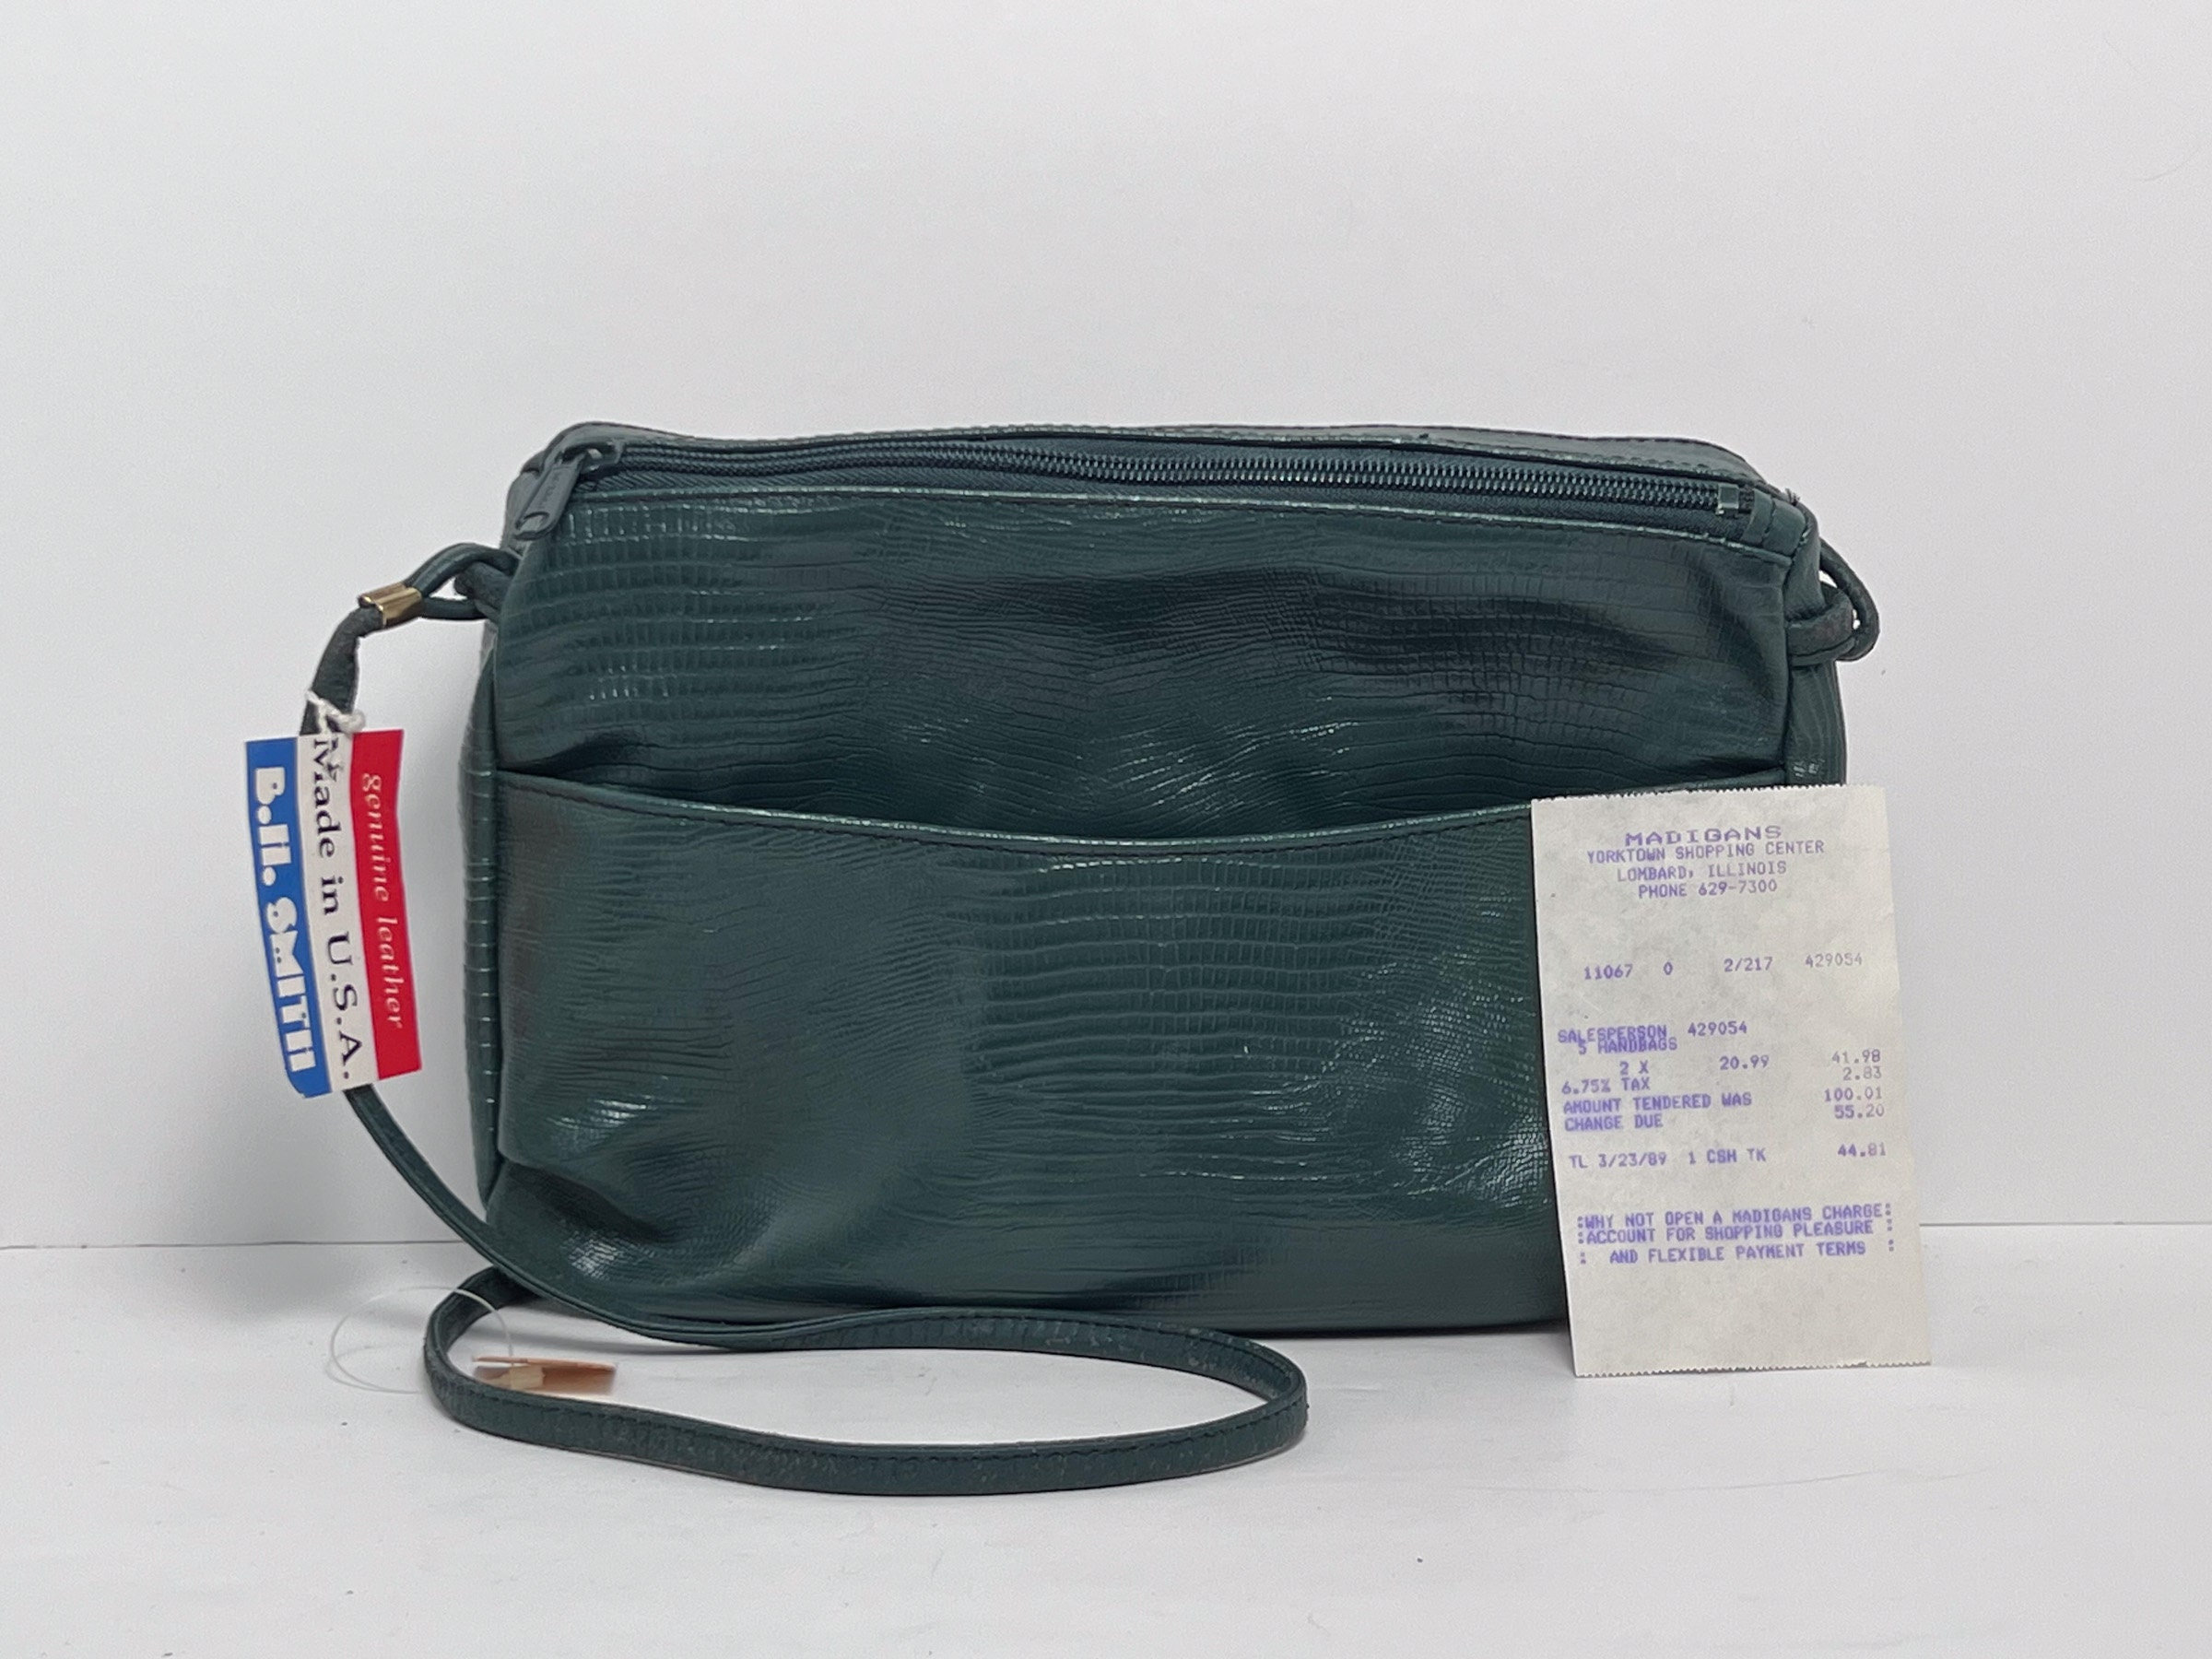 ISABELLE vegan satchel faux croc texture.  Betsey johnson handbags, Purses  and handbags, Kate spade purse black